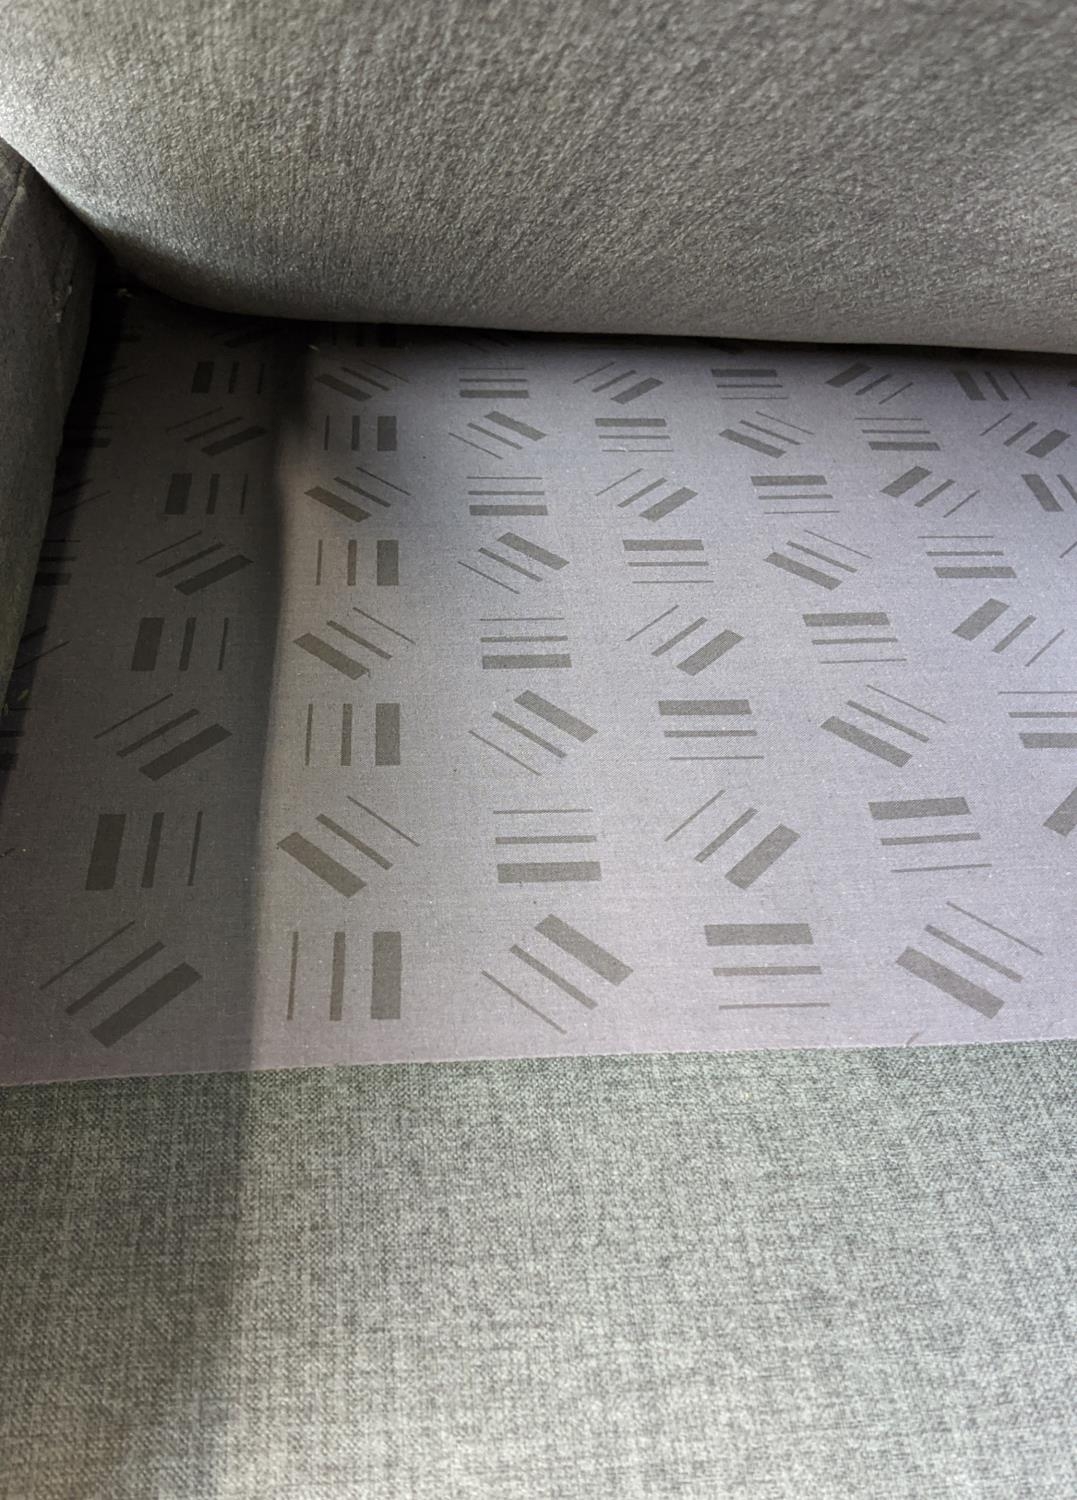 SOFA, grey upholstery, 78cm H x 188cm W. - Image 7 of 8